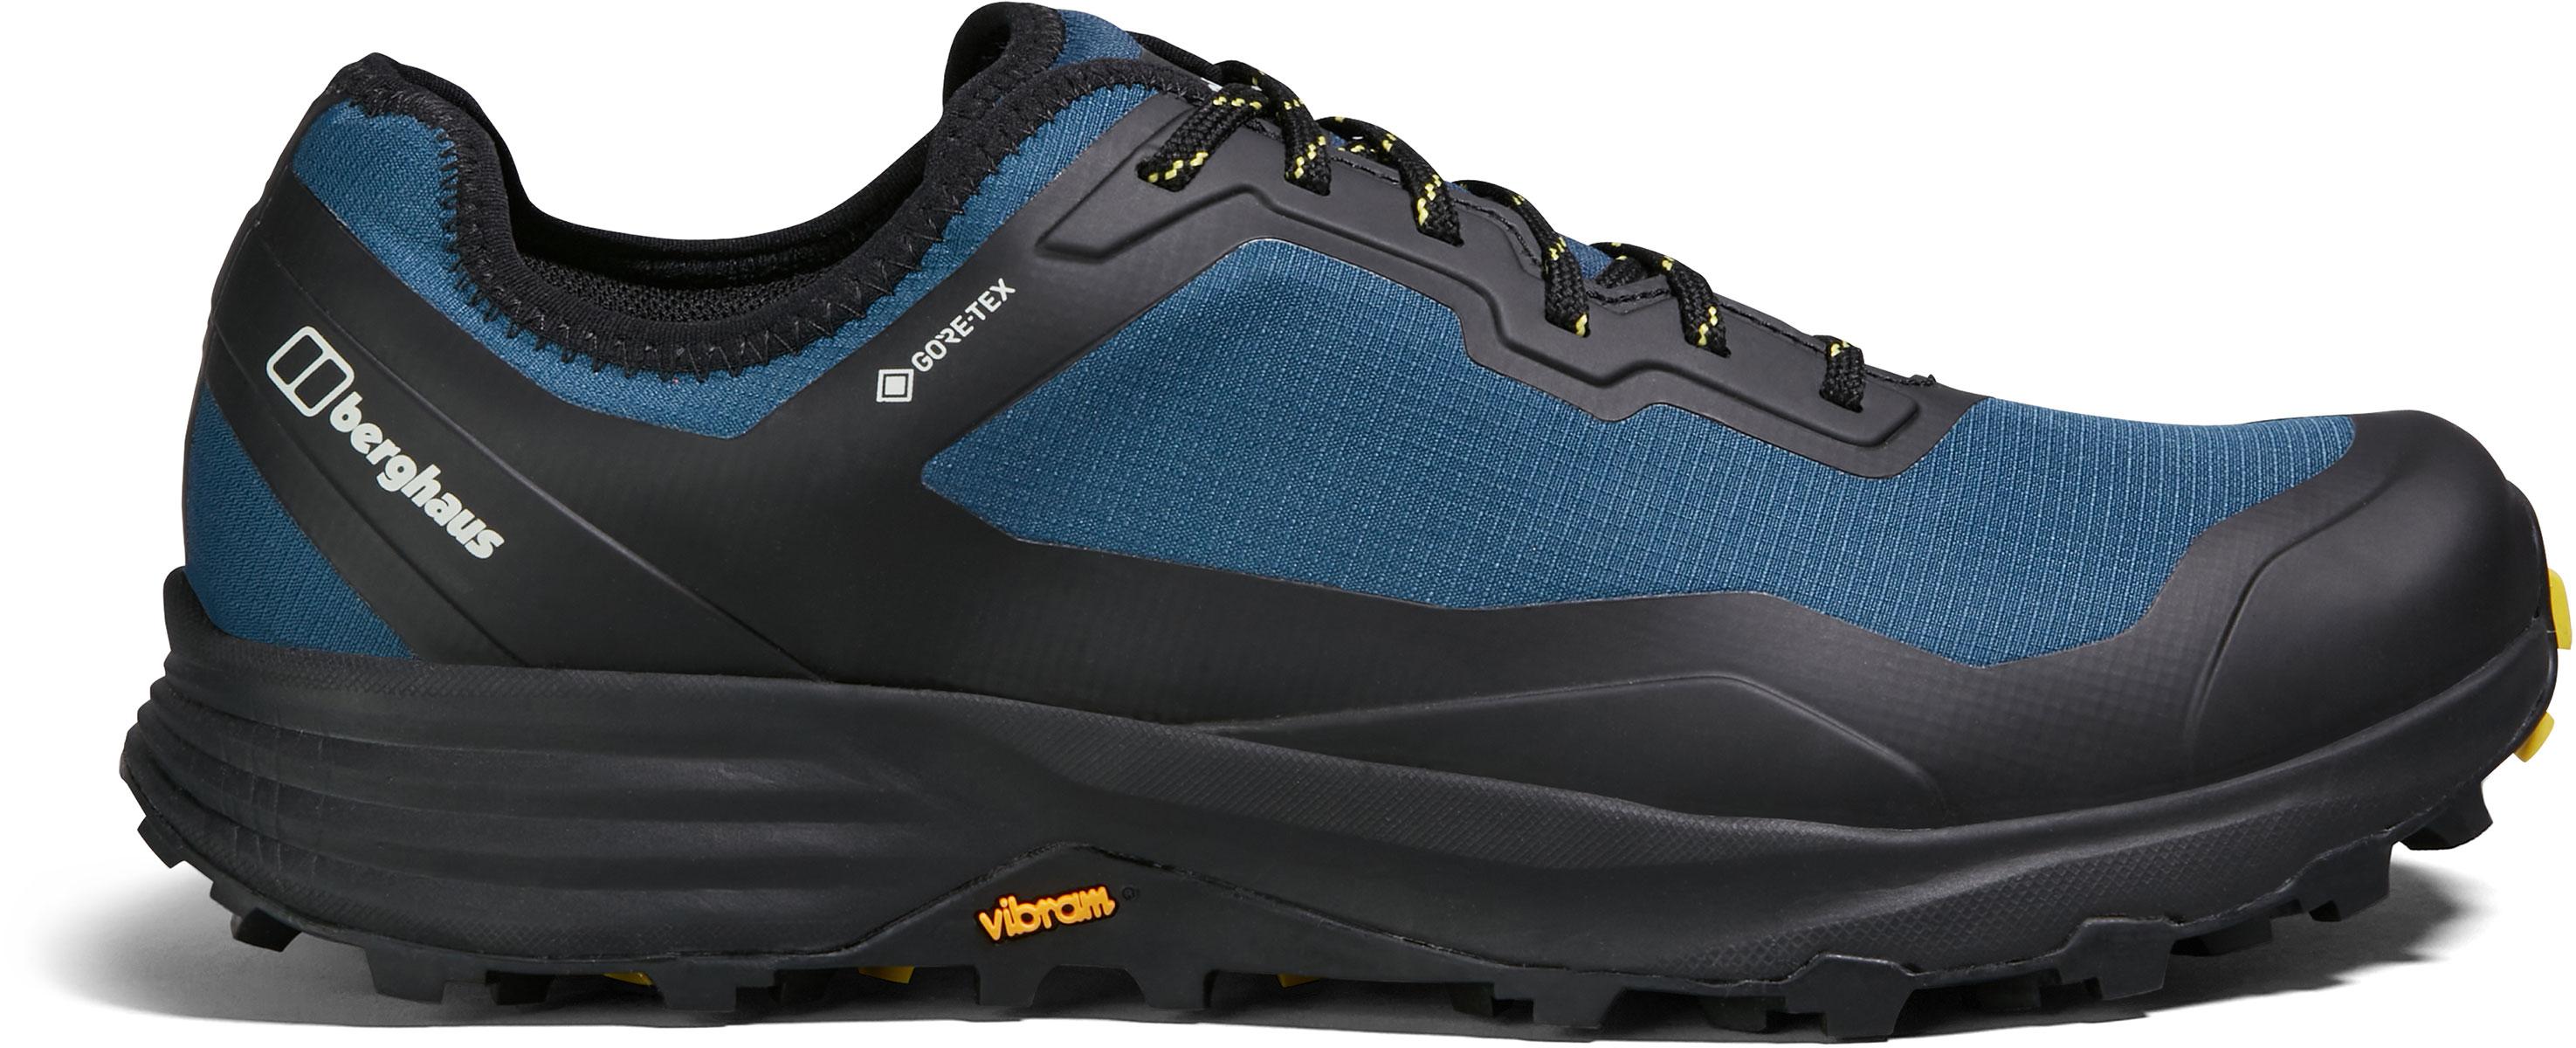 Berghaus Vc22 Gore-tex Hiking Shoes - Jet Black/hale Navy/corn Husk